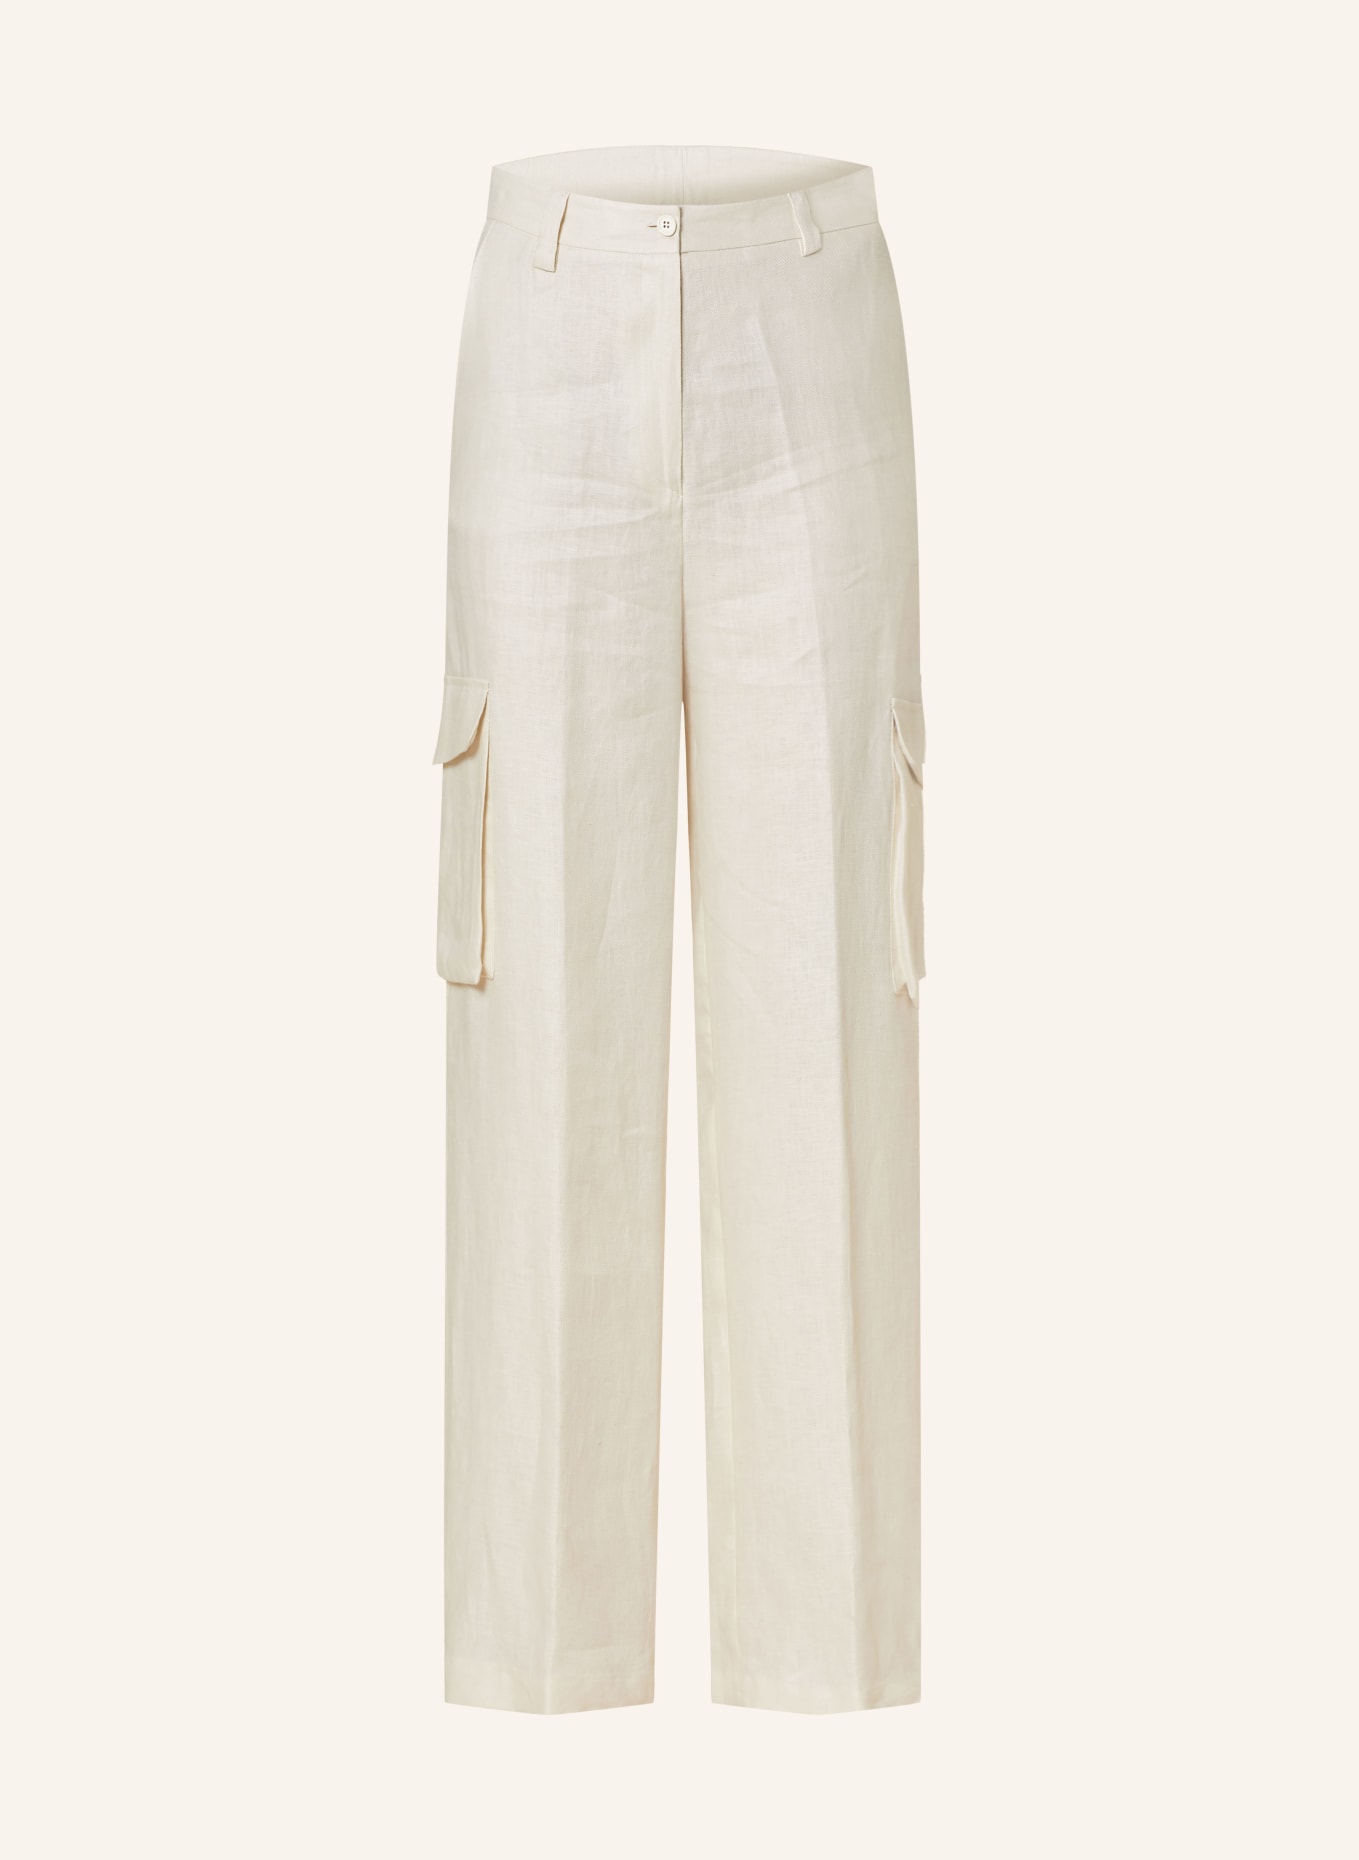 ANTONELLI firenze Cargo pants REYNOLDS made of linen, Color: CREAM (Image 1)